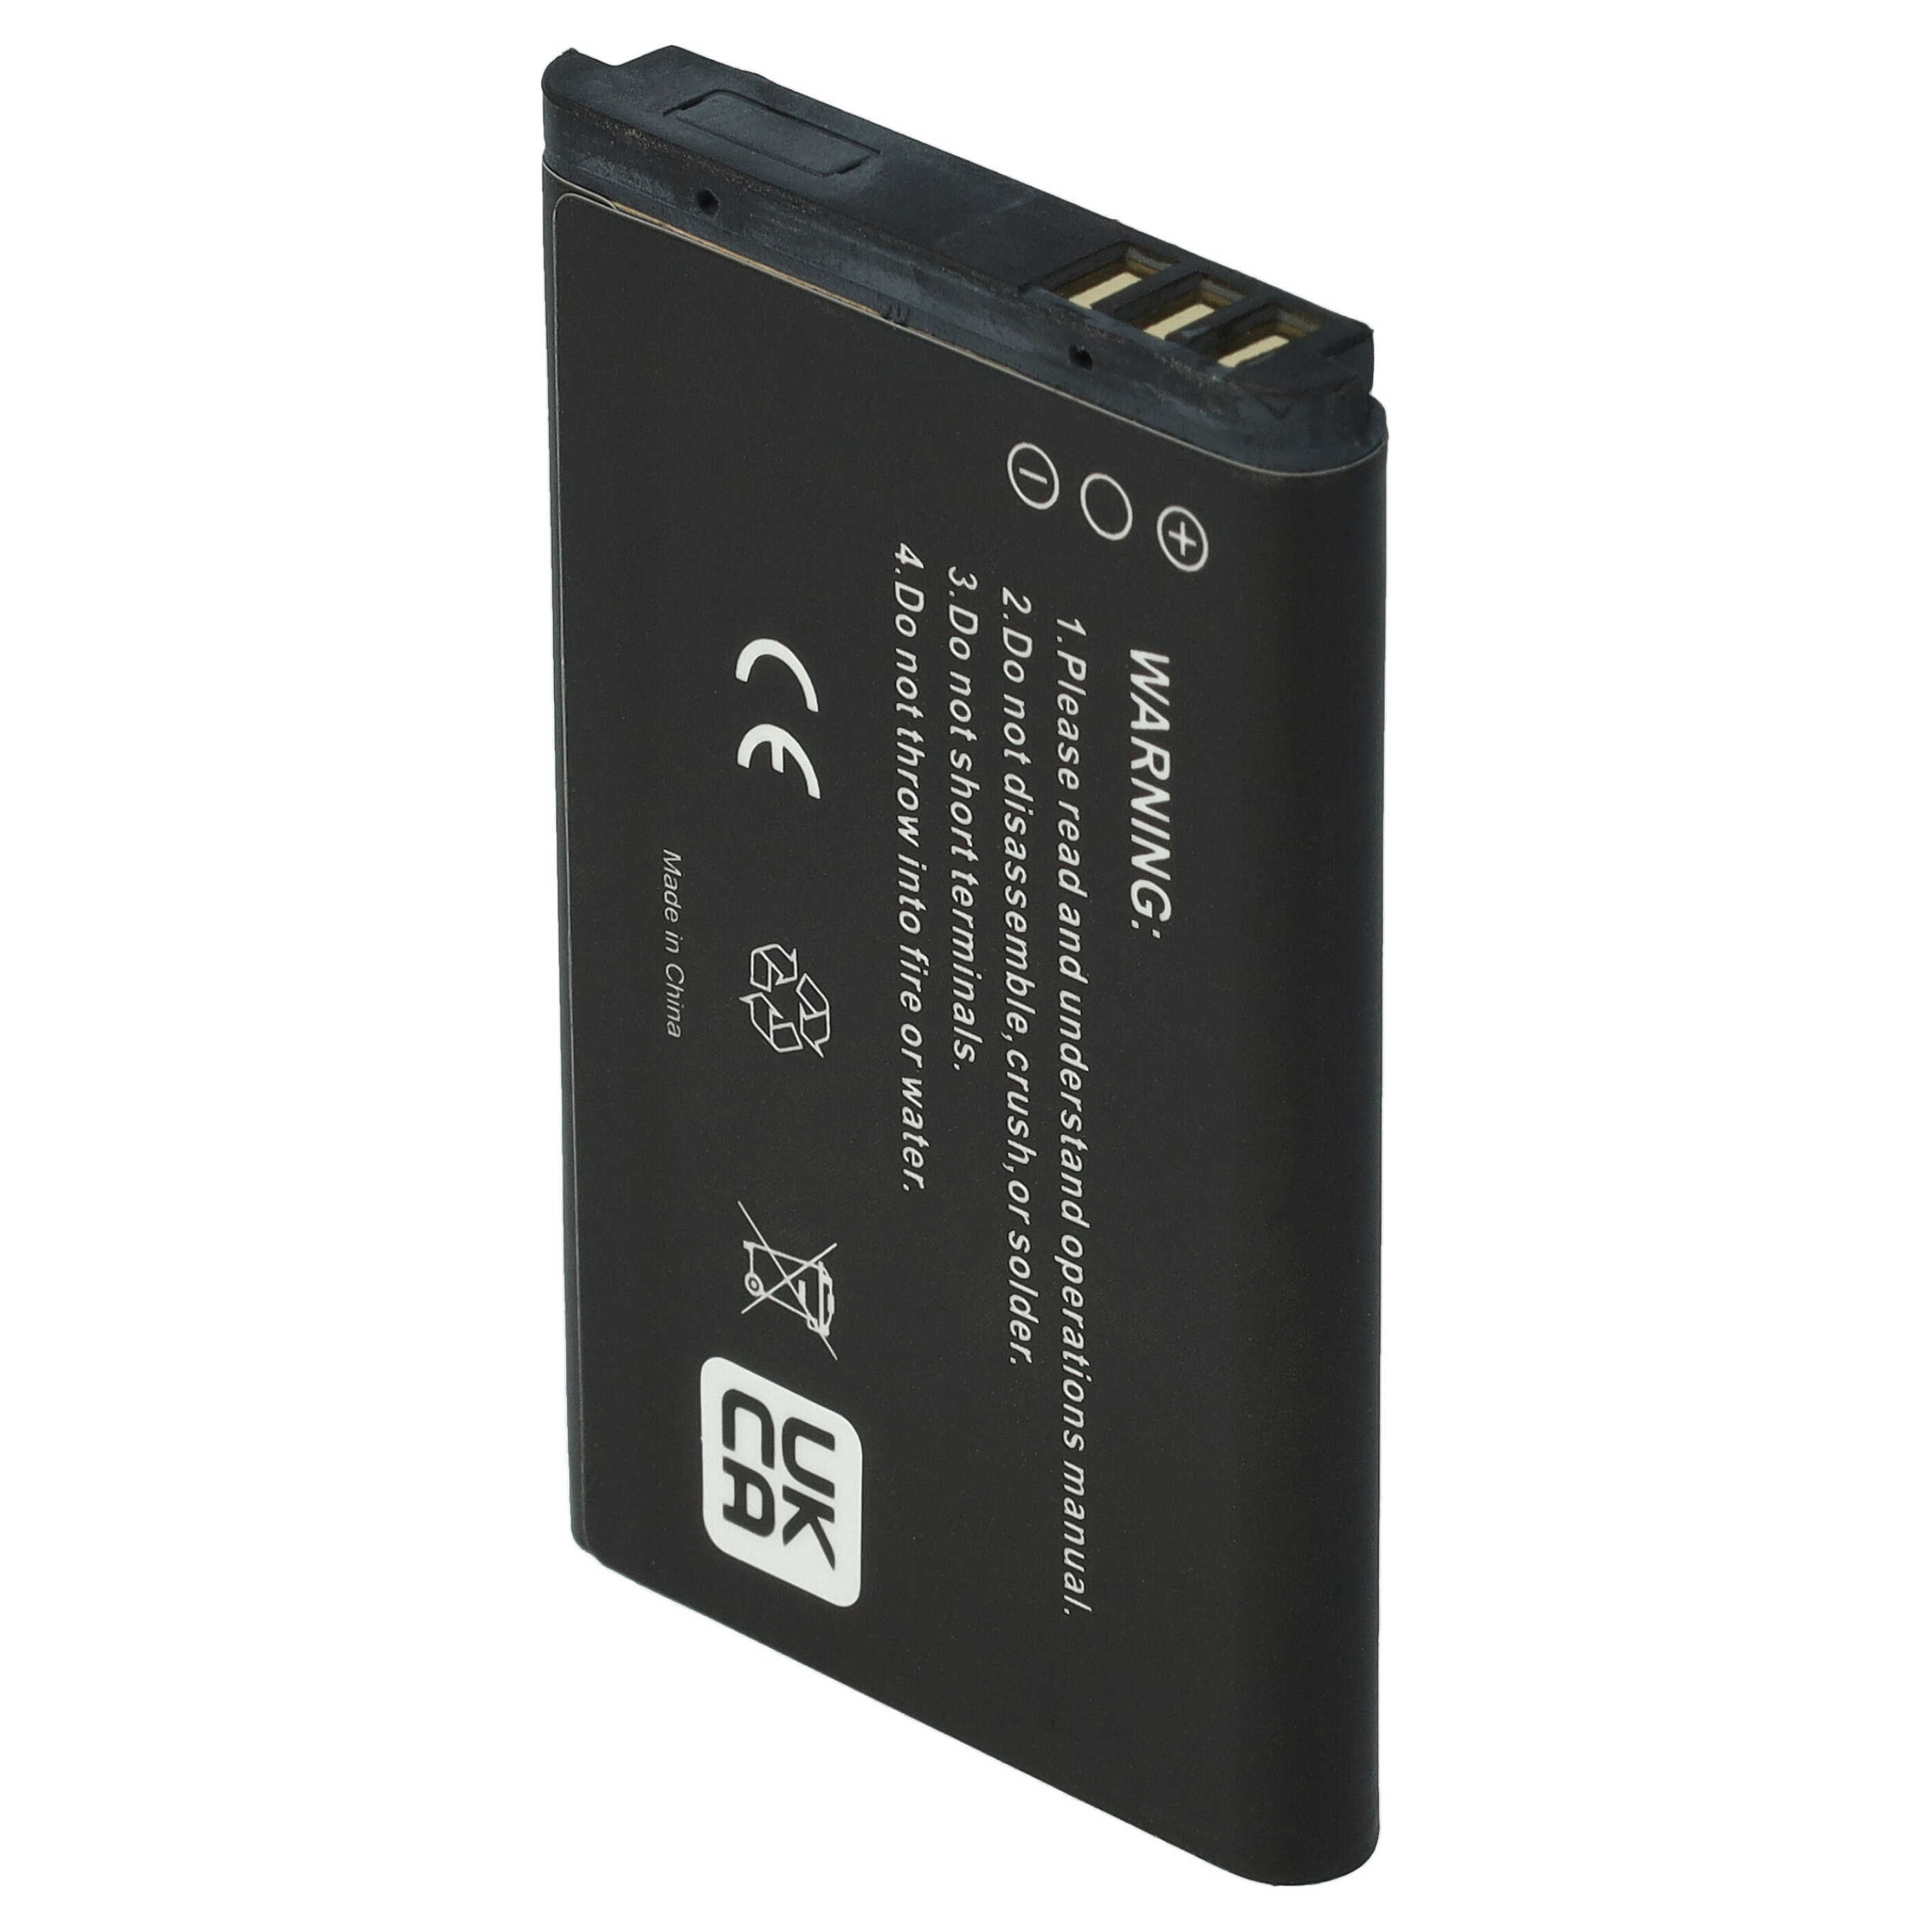 Batteria per ricevitore GPS bluetooth sostituisce HX-N3650A, BA-01, HXE-W01 Royaltek - 700mAh 3,7V Li-Ion